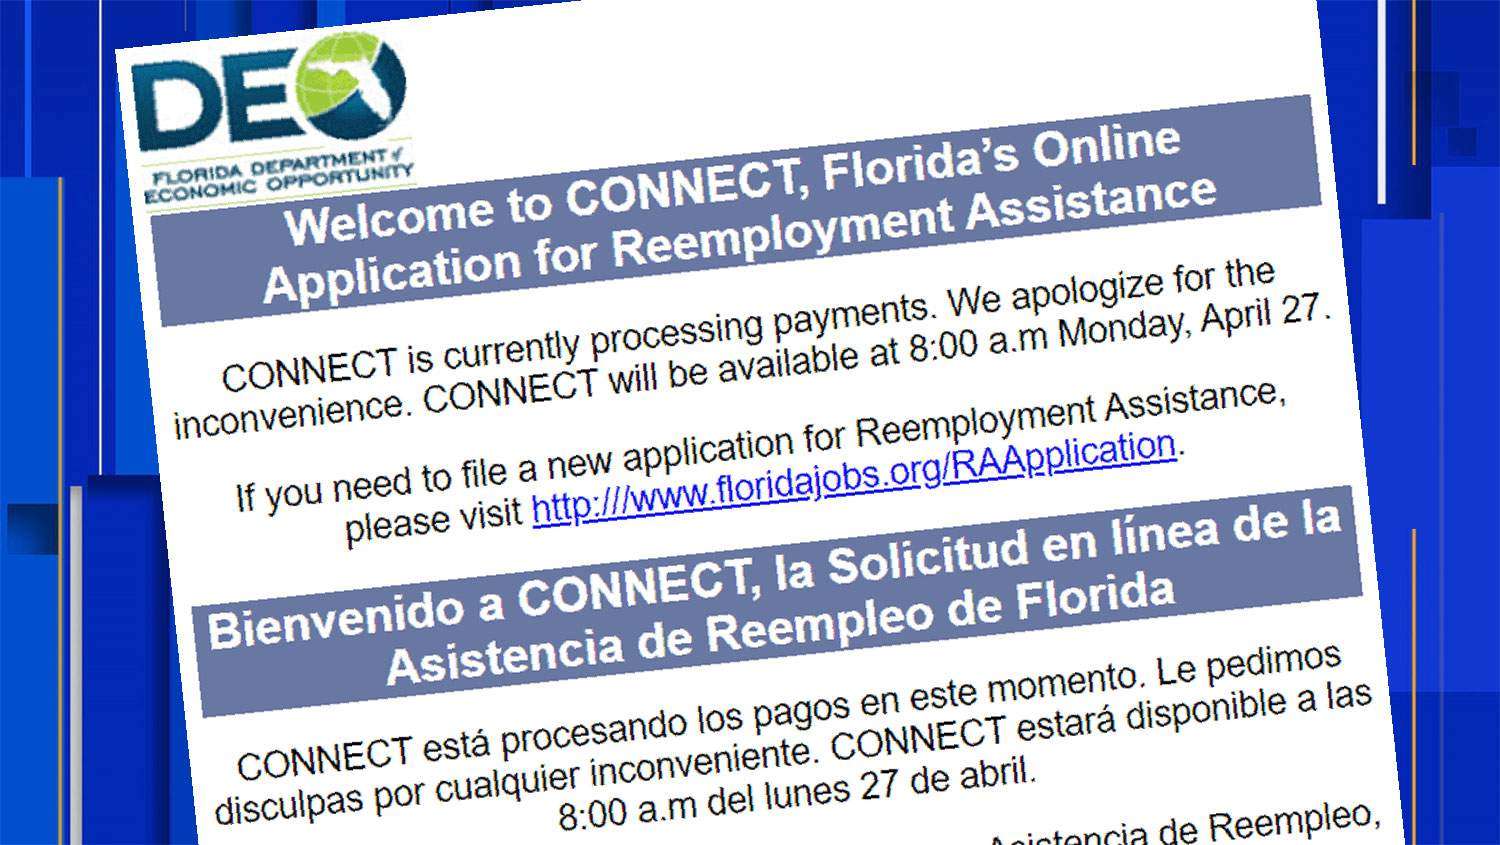 Floridas backlogged unemployment website offline for days ...